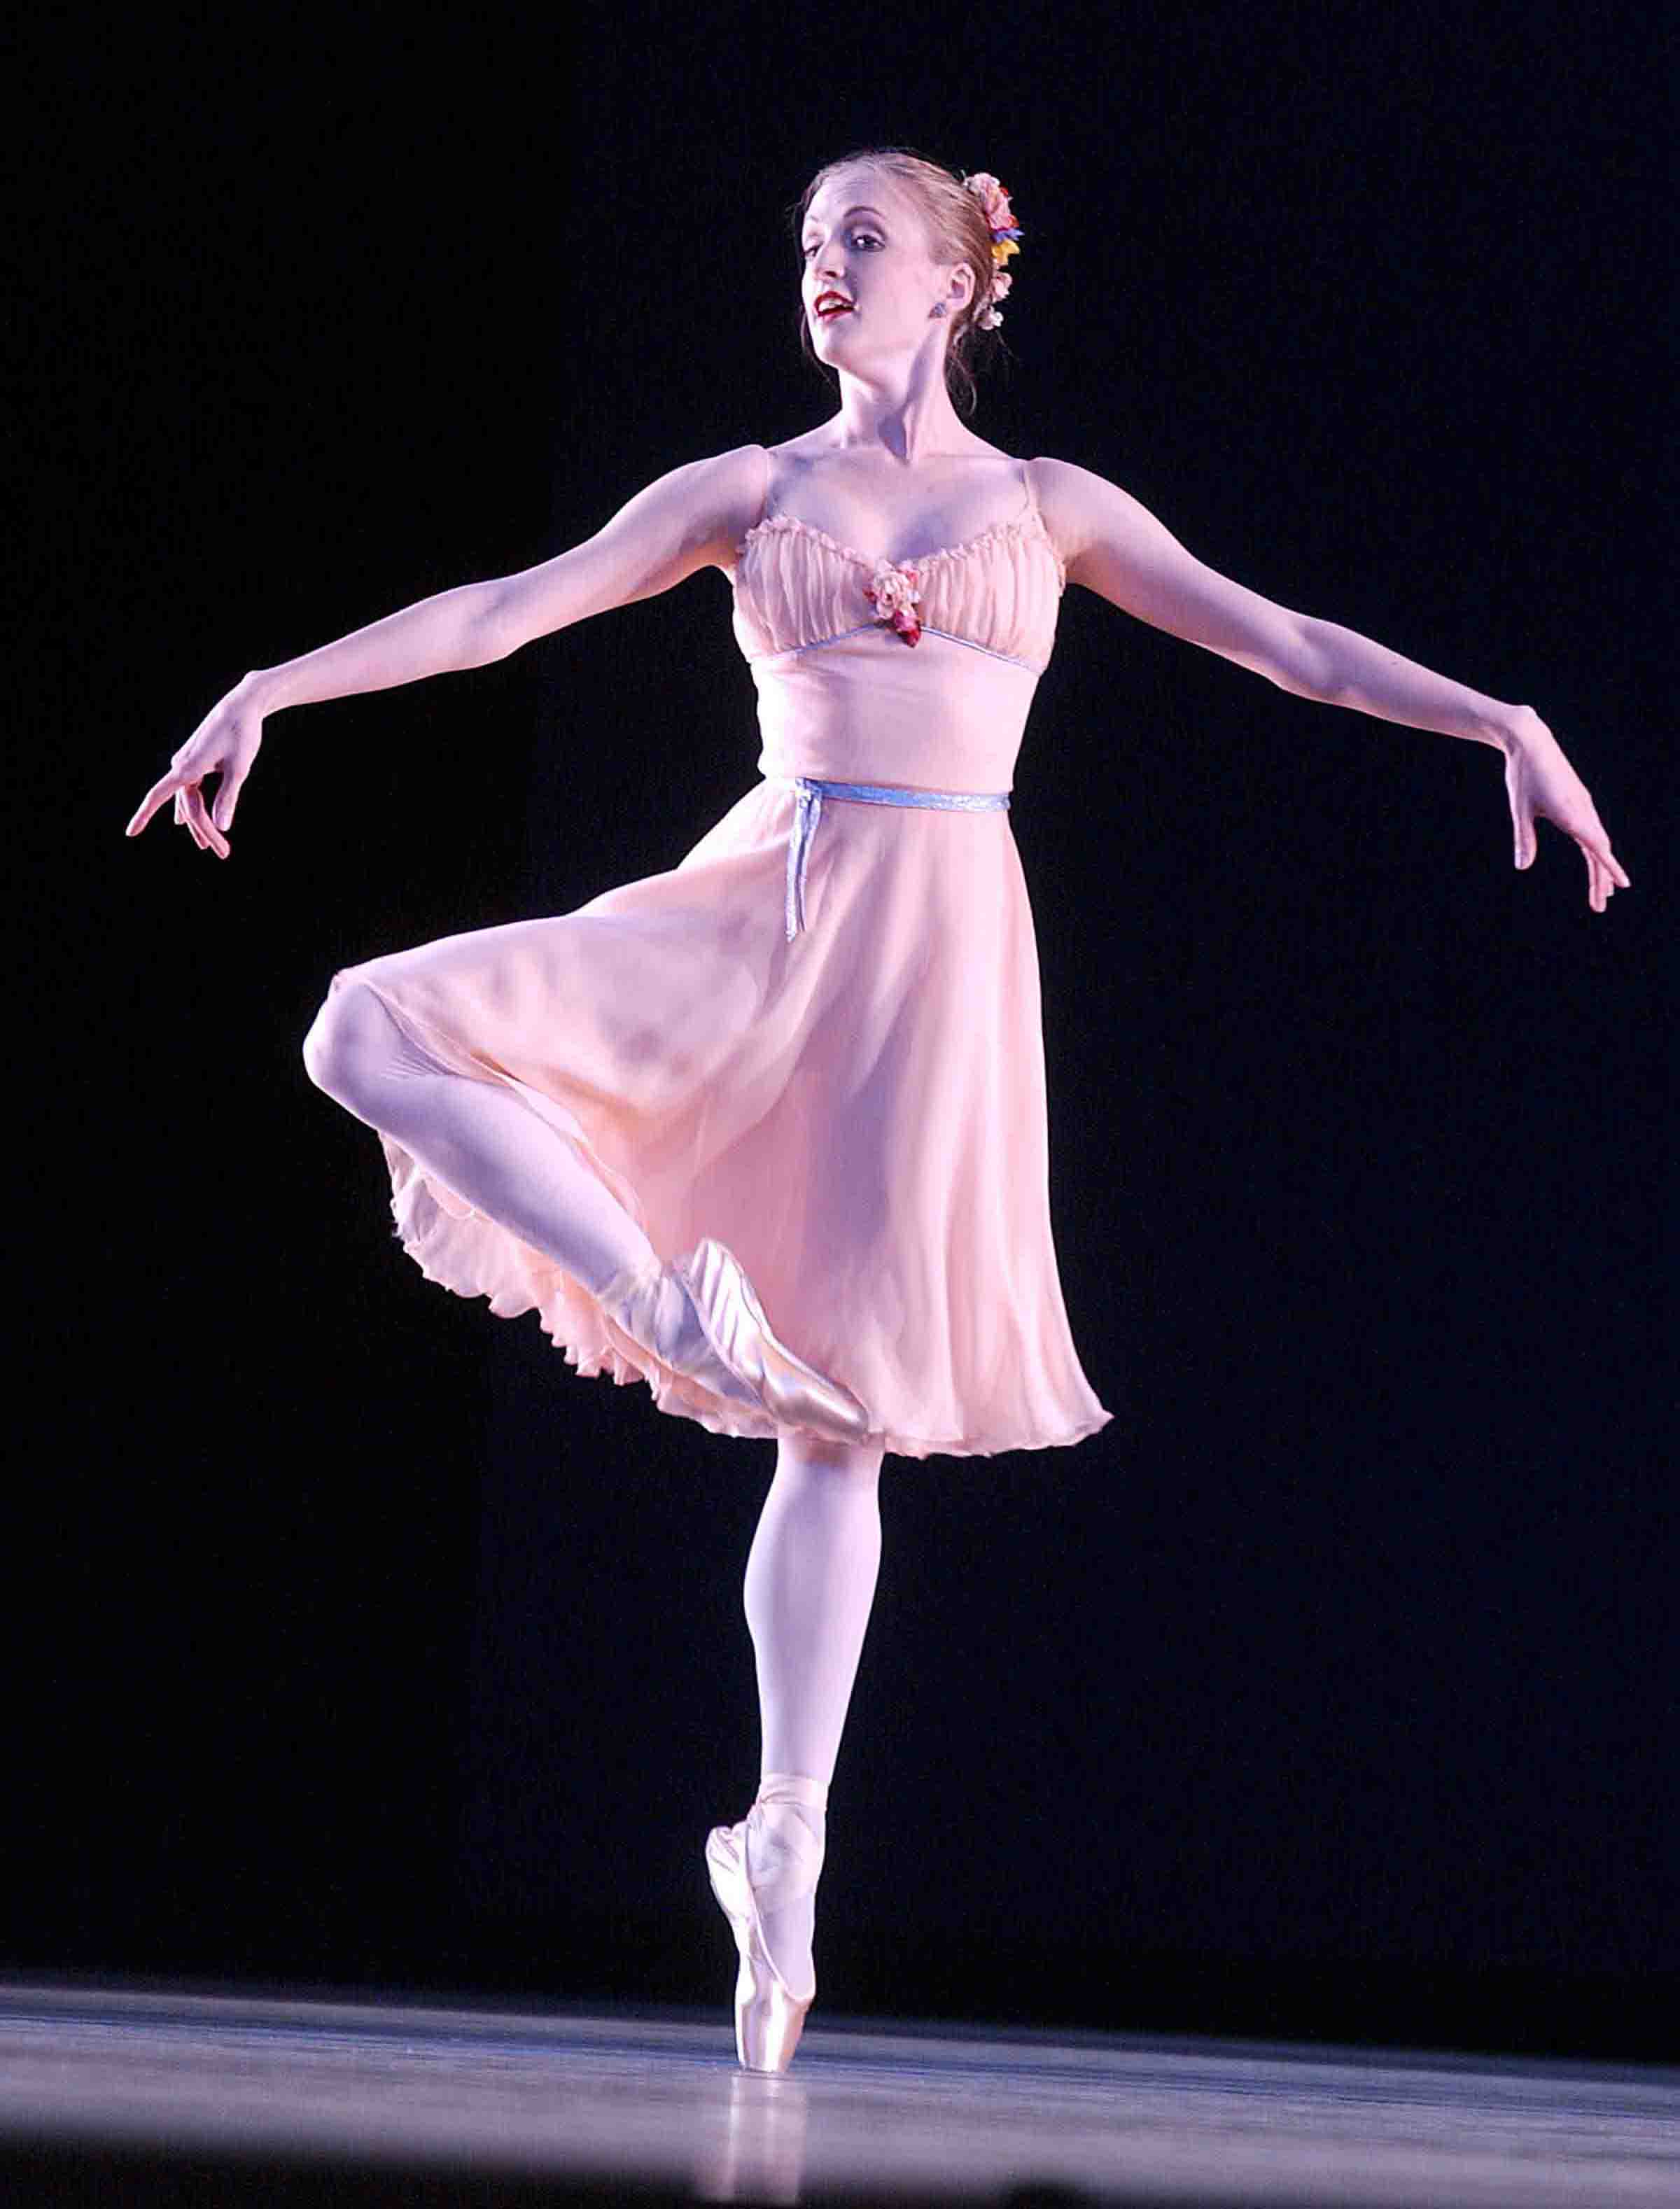 balletic embrace dress